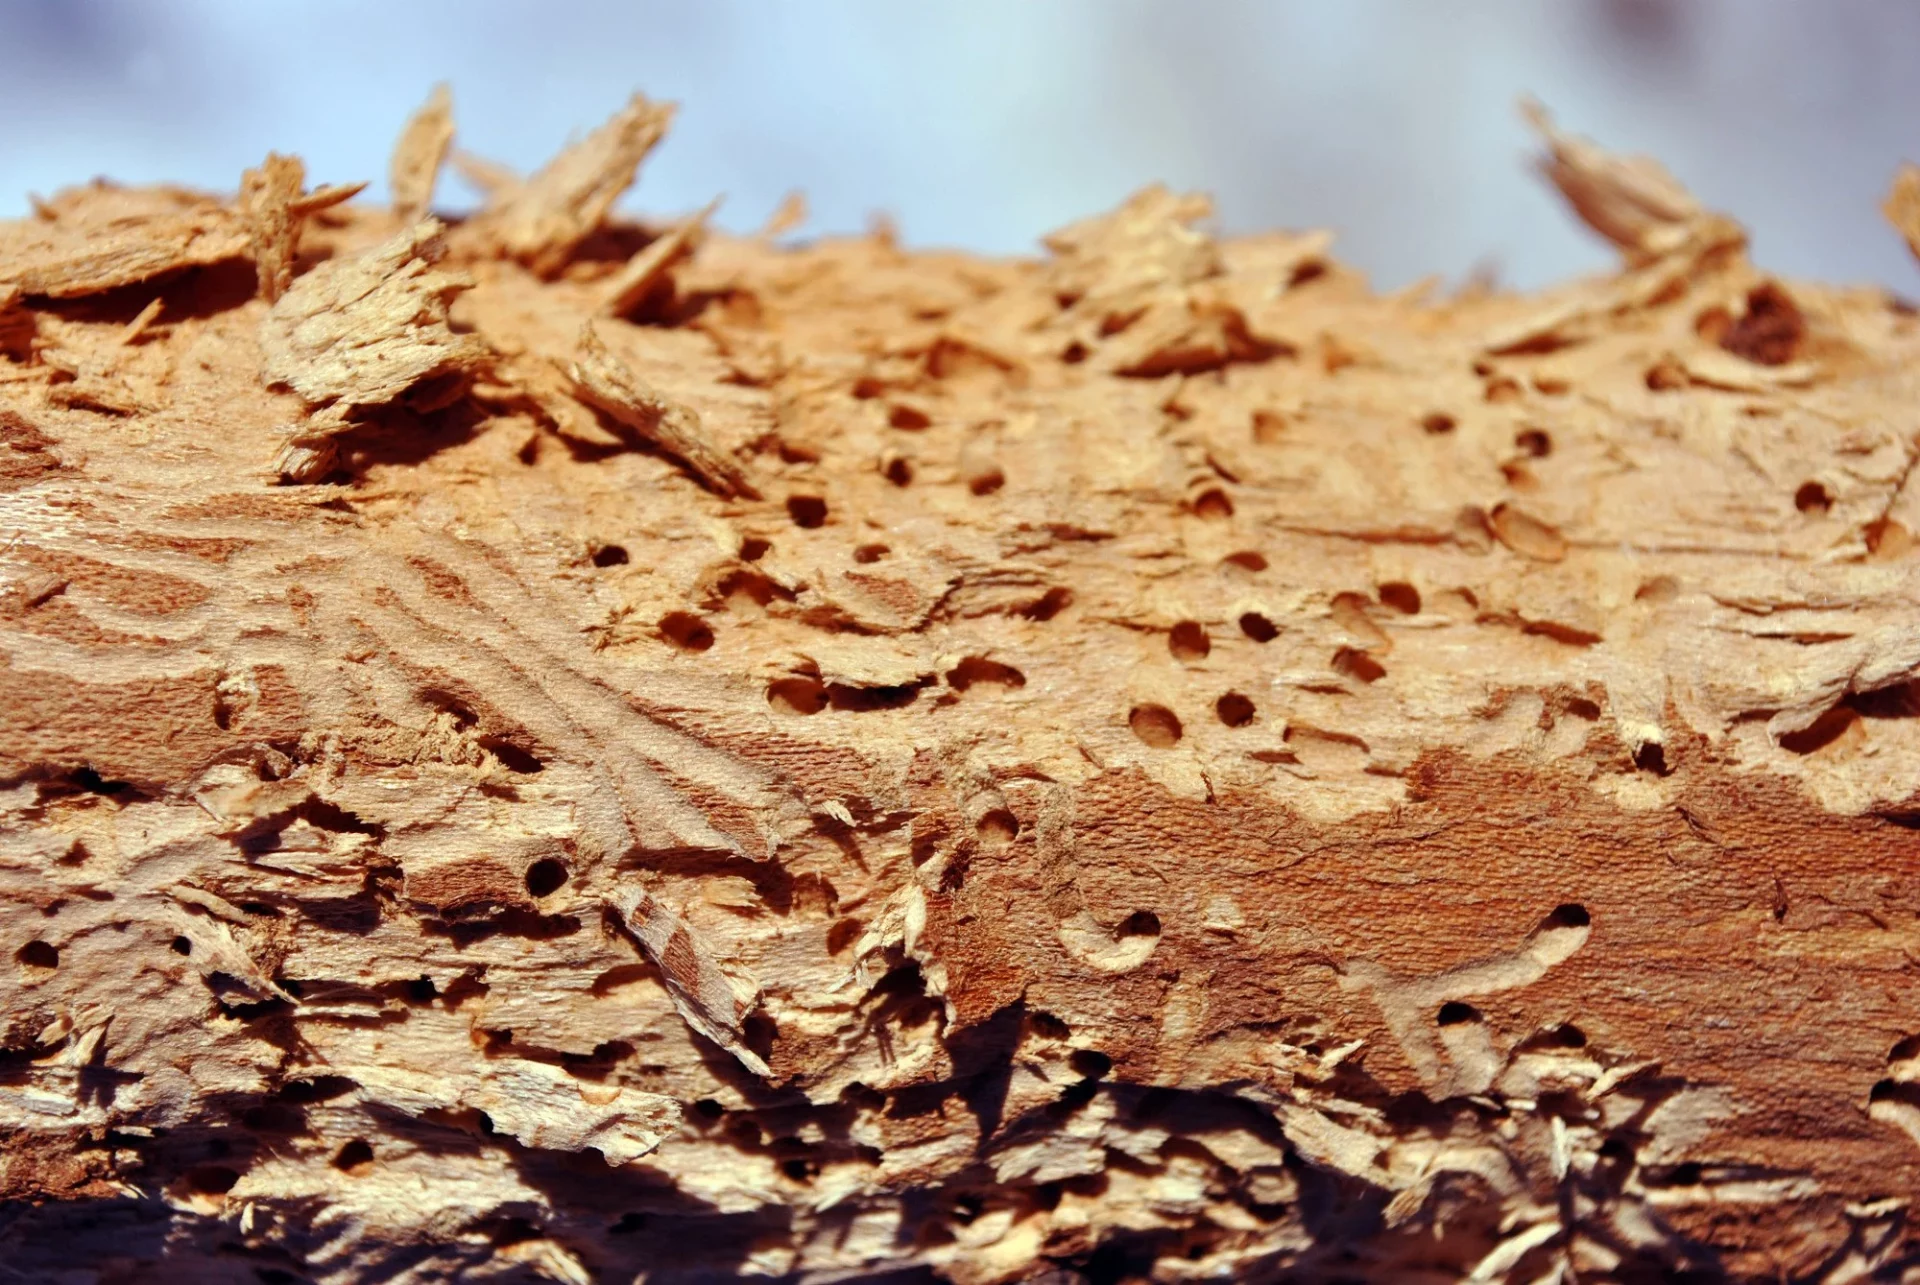 Termite Larvae vs Maggots